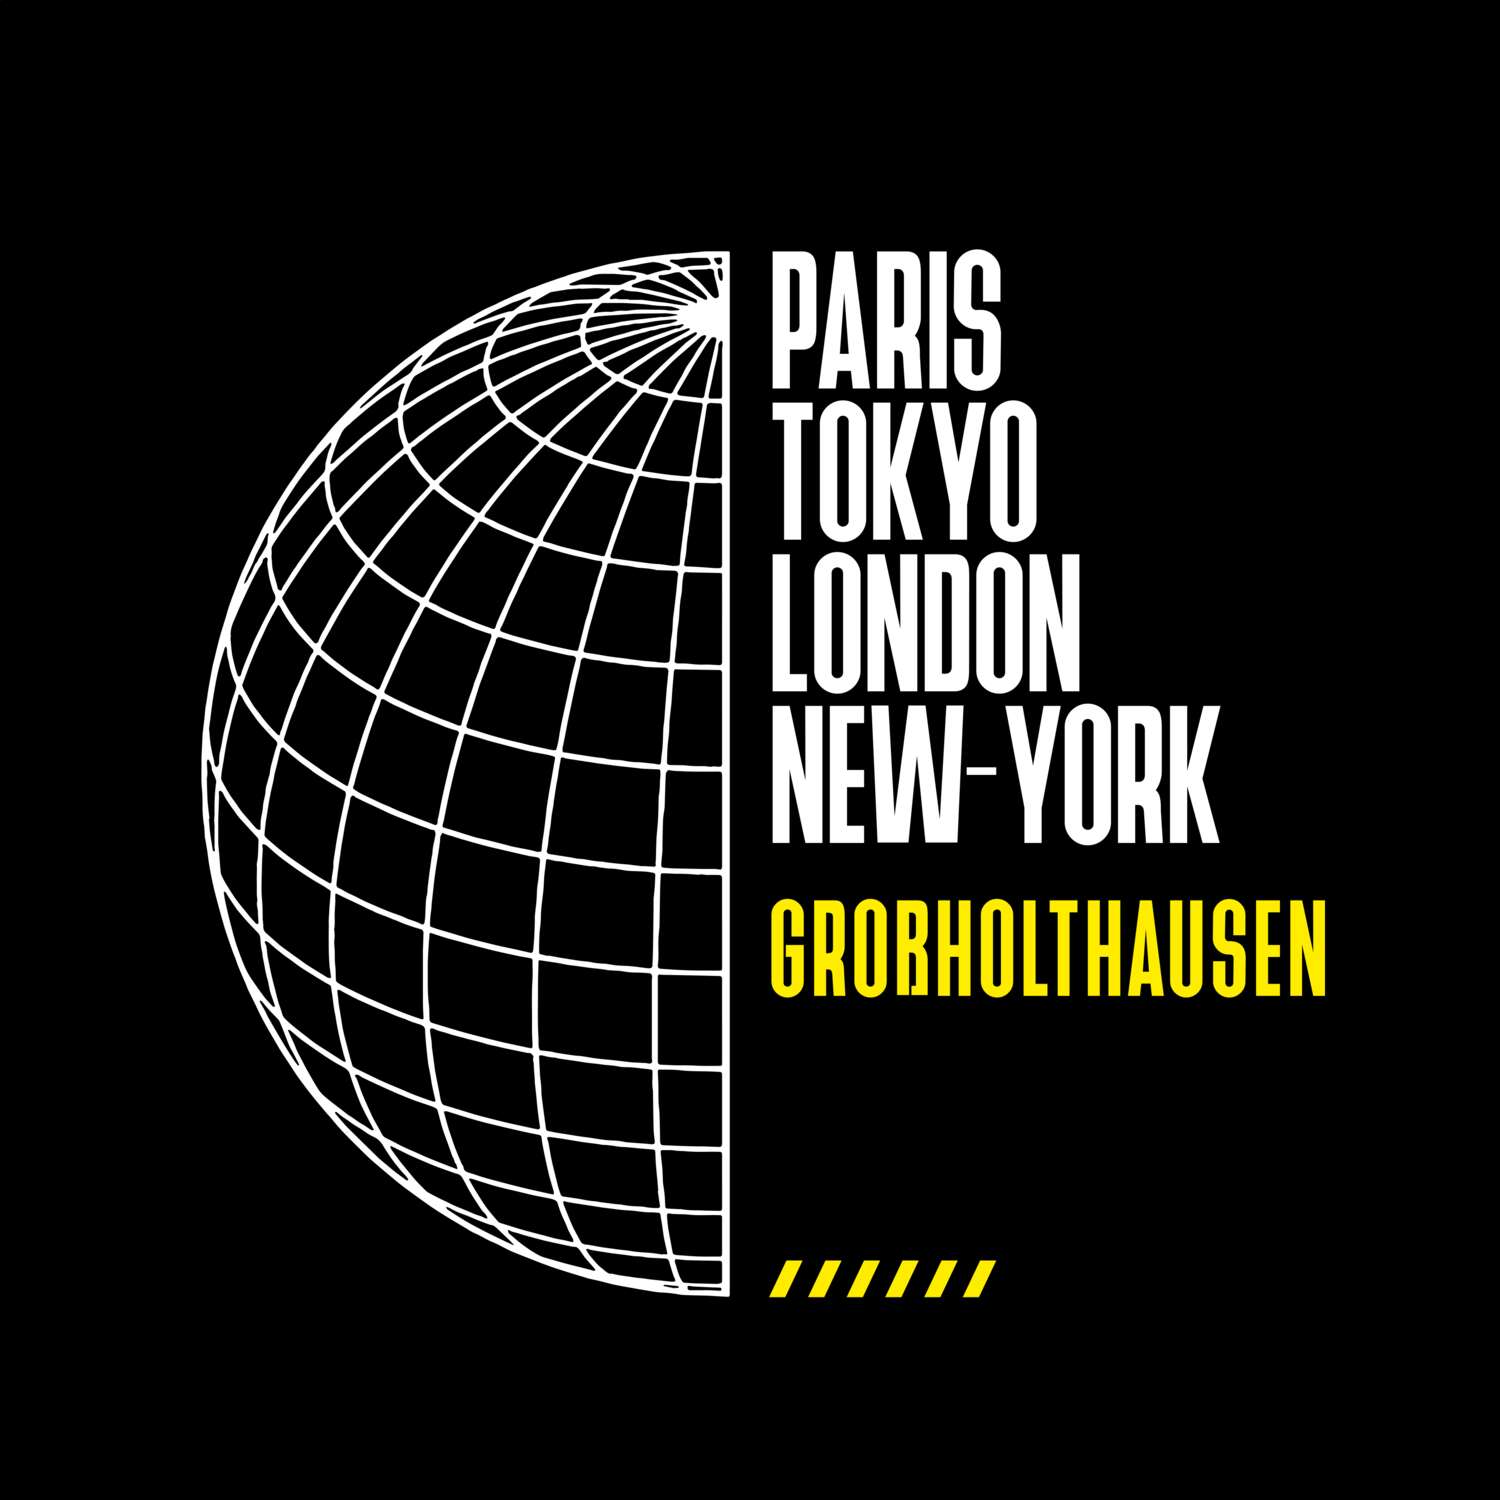 Großholthausen T-Shirt »Paris Tokyo London«